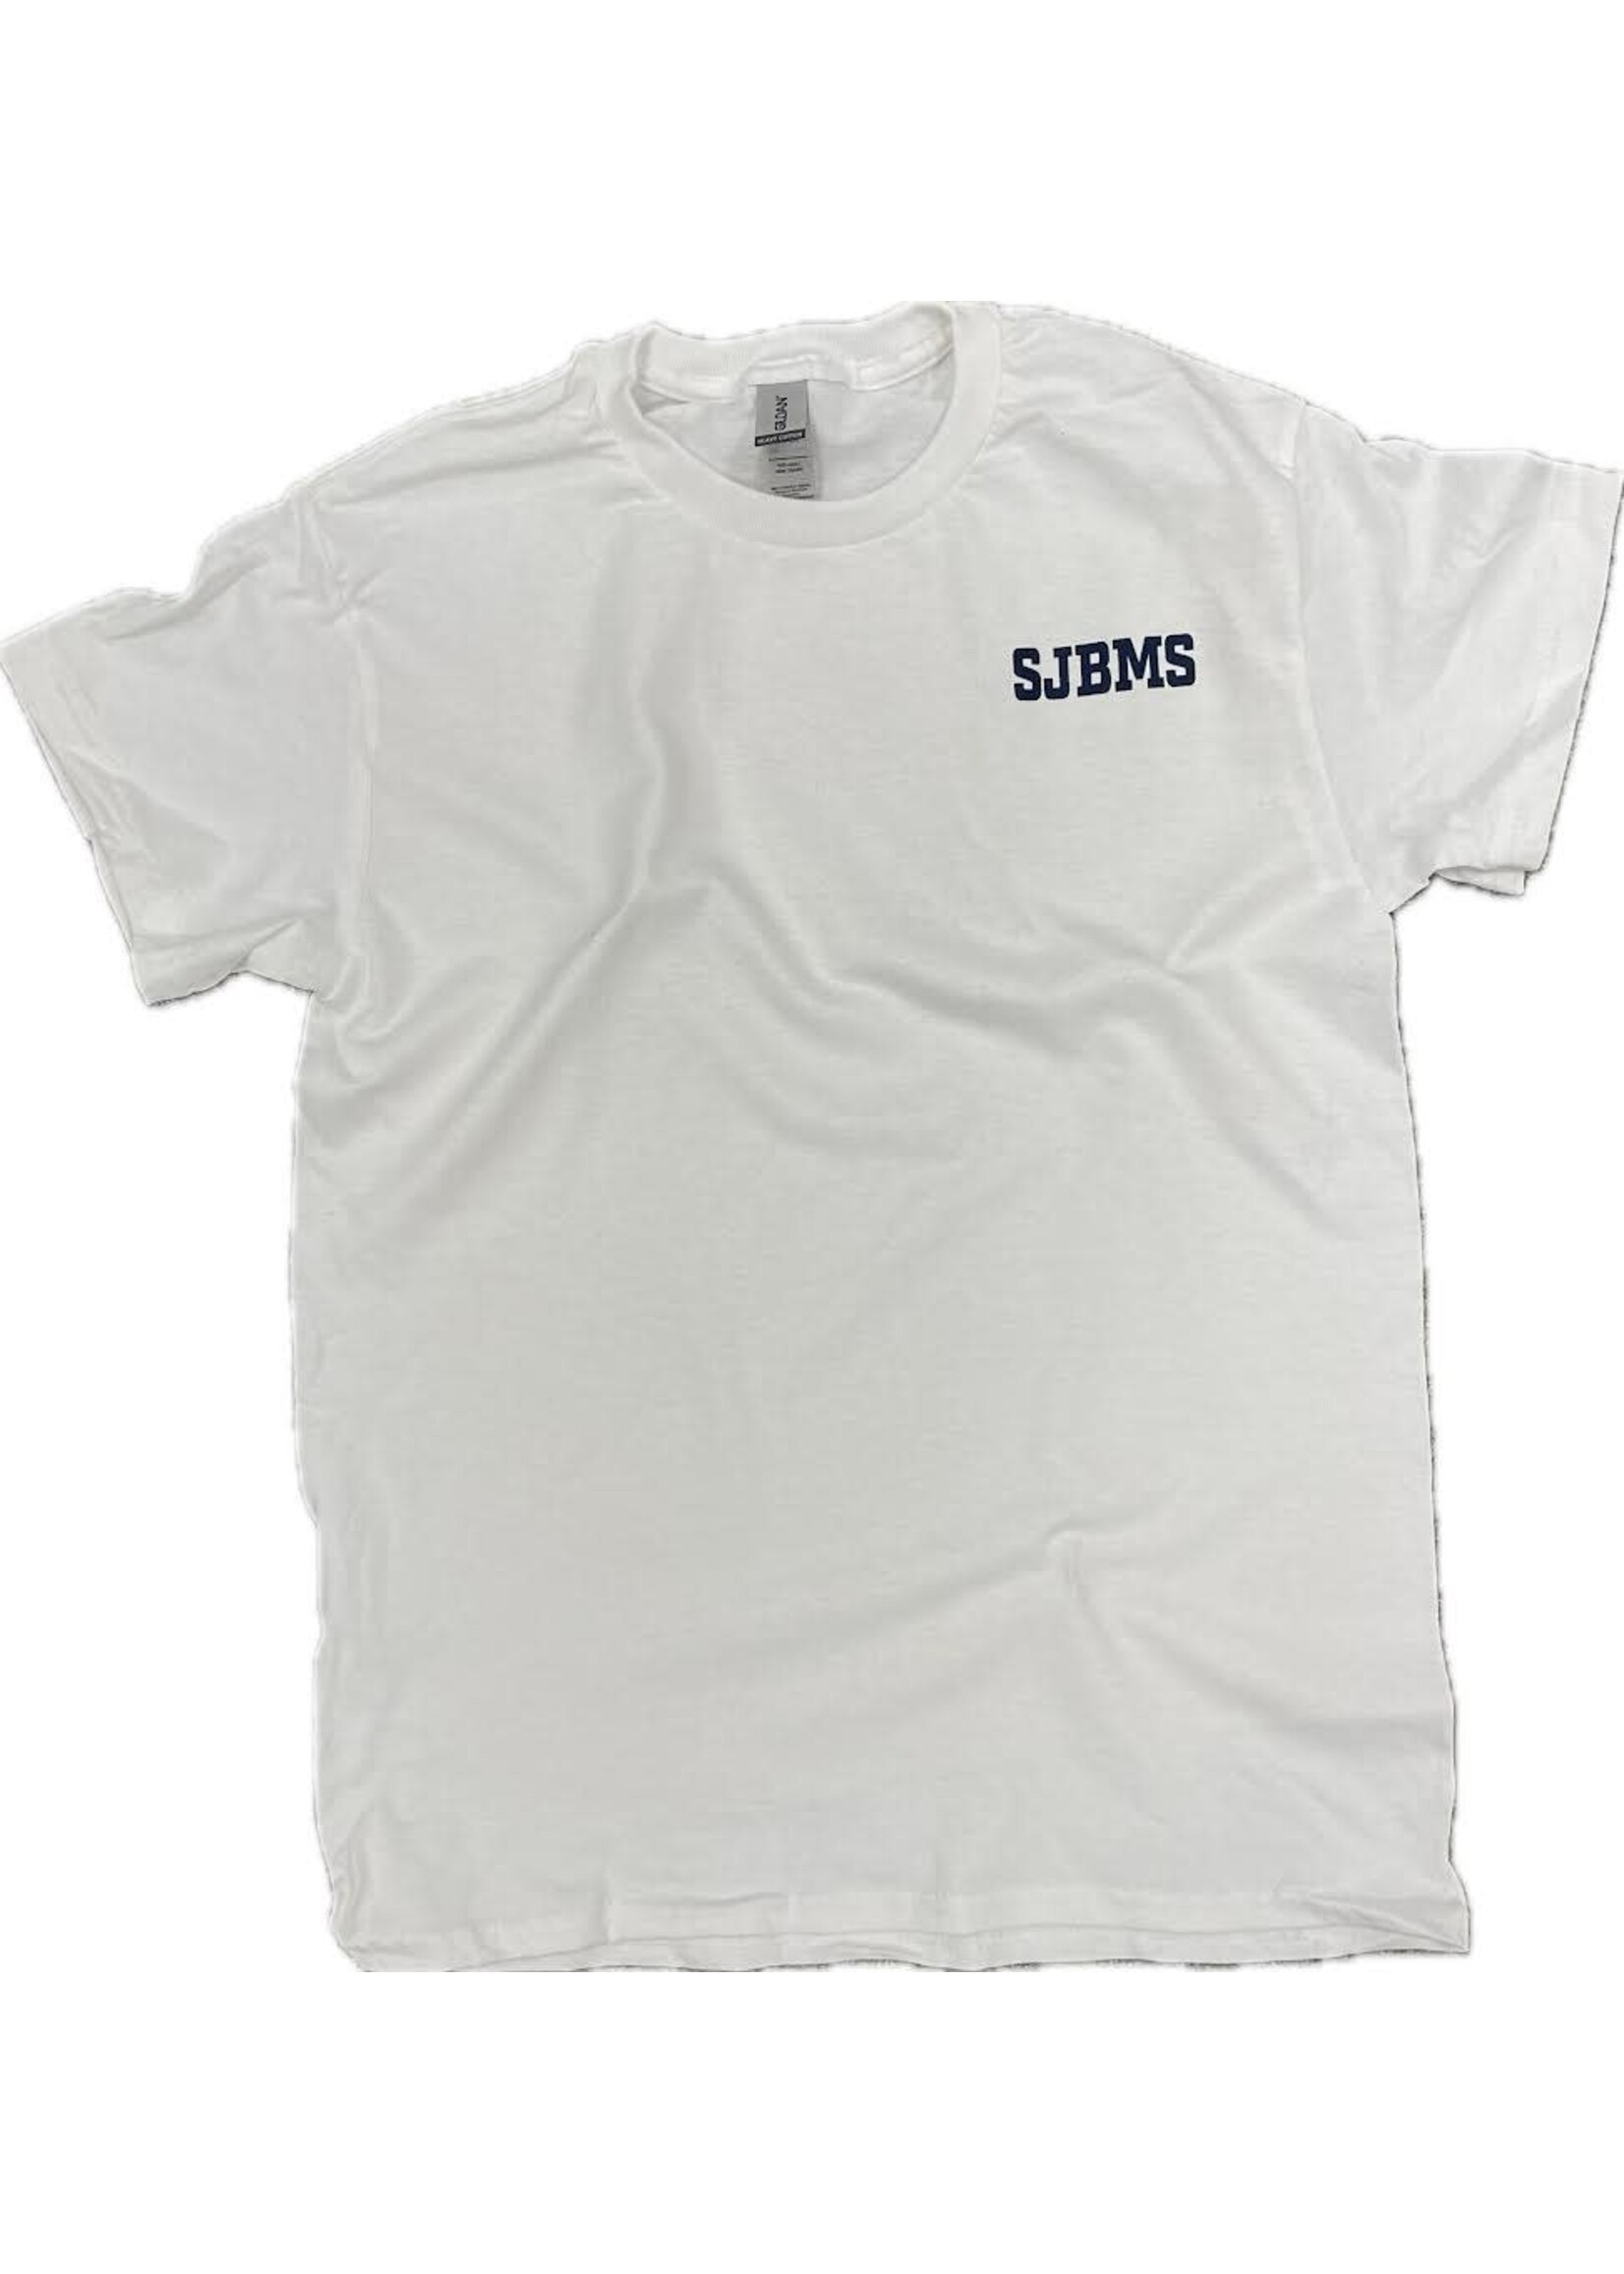 NON-UNIFORM SJBMS Spirit Shirt, Unisex